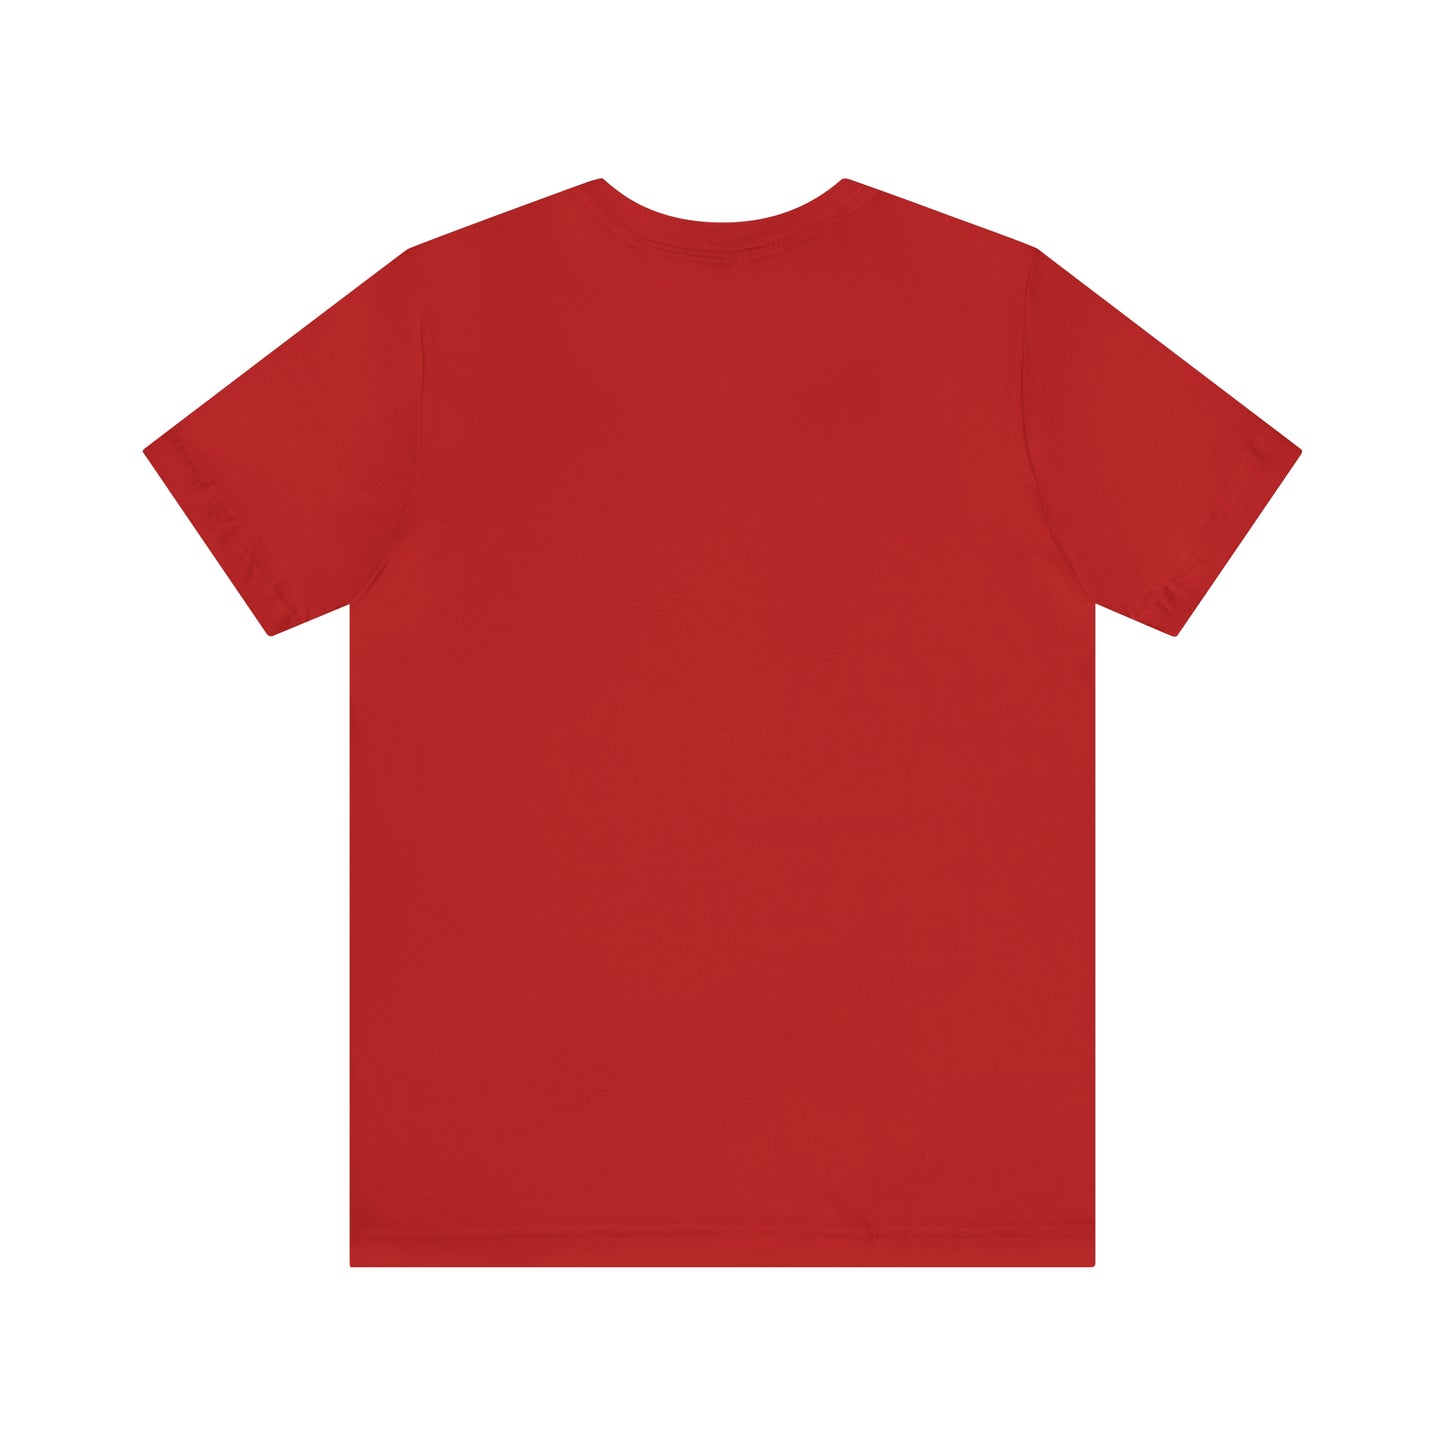 Happy Labour Day Celebration Tee T-Shirt Petrova Designs